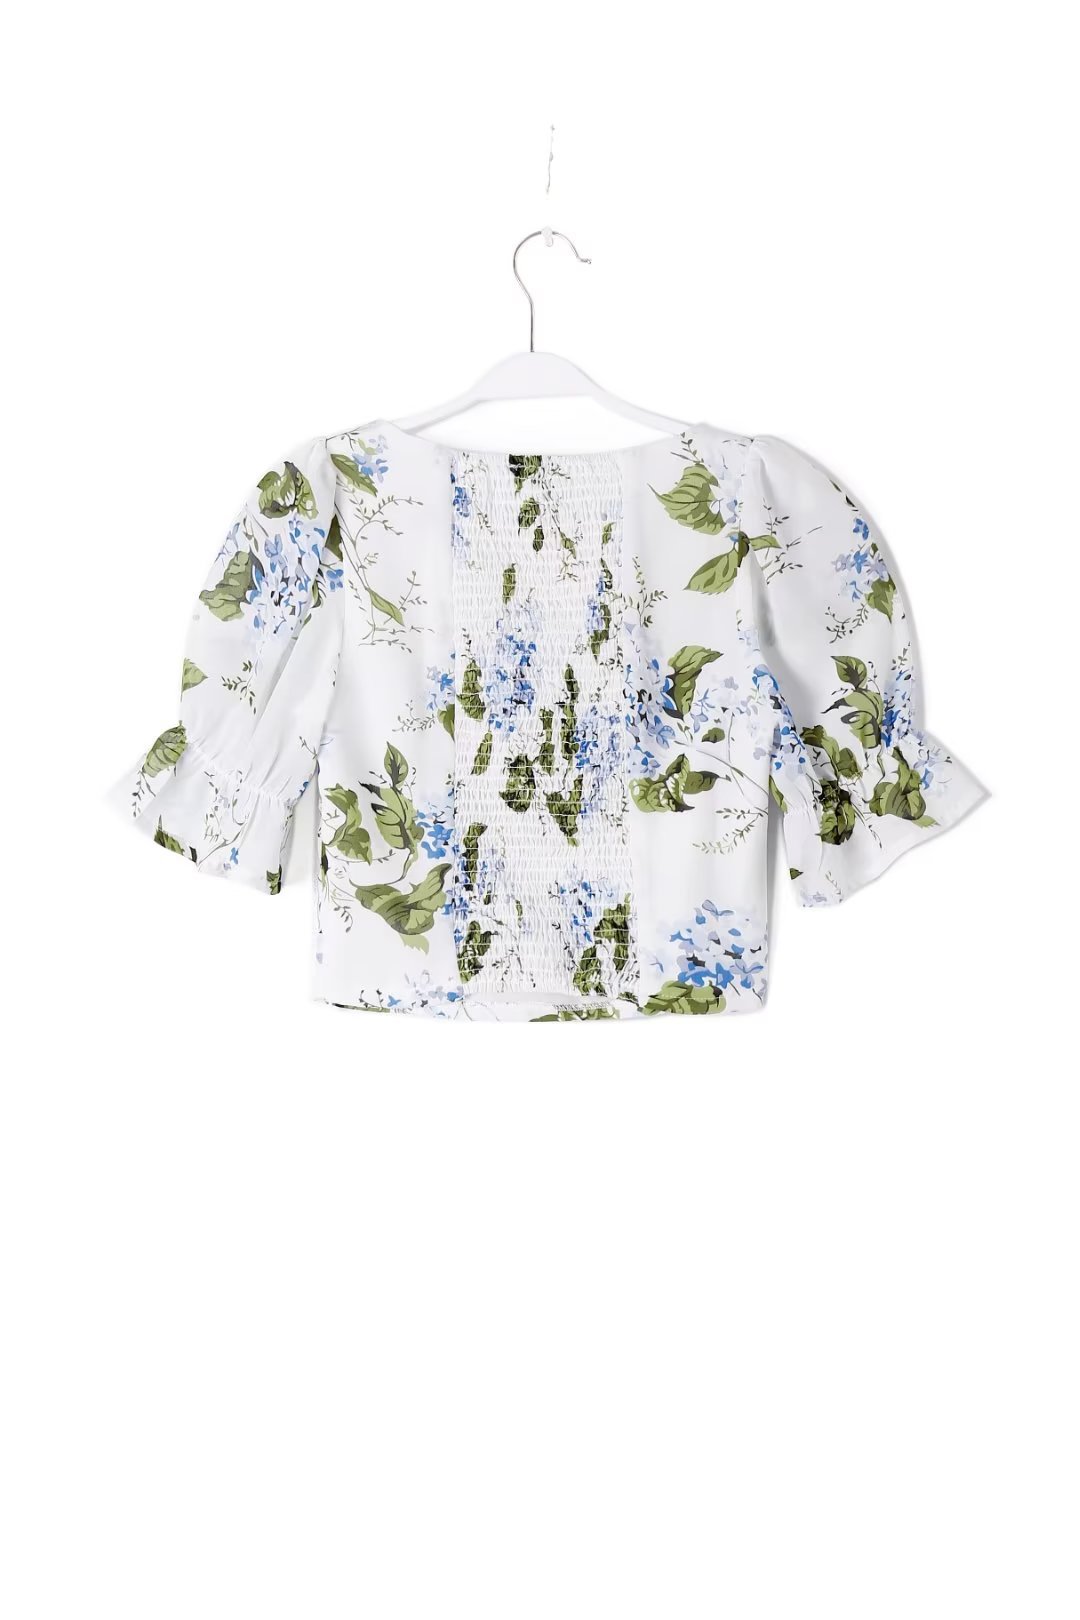 Women's T-shirt Short Sleeve Blouses Tassel Streetwear Leaves Flower display picture 7